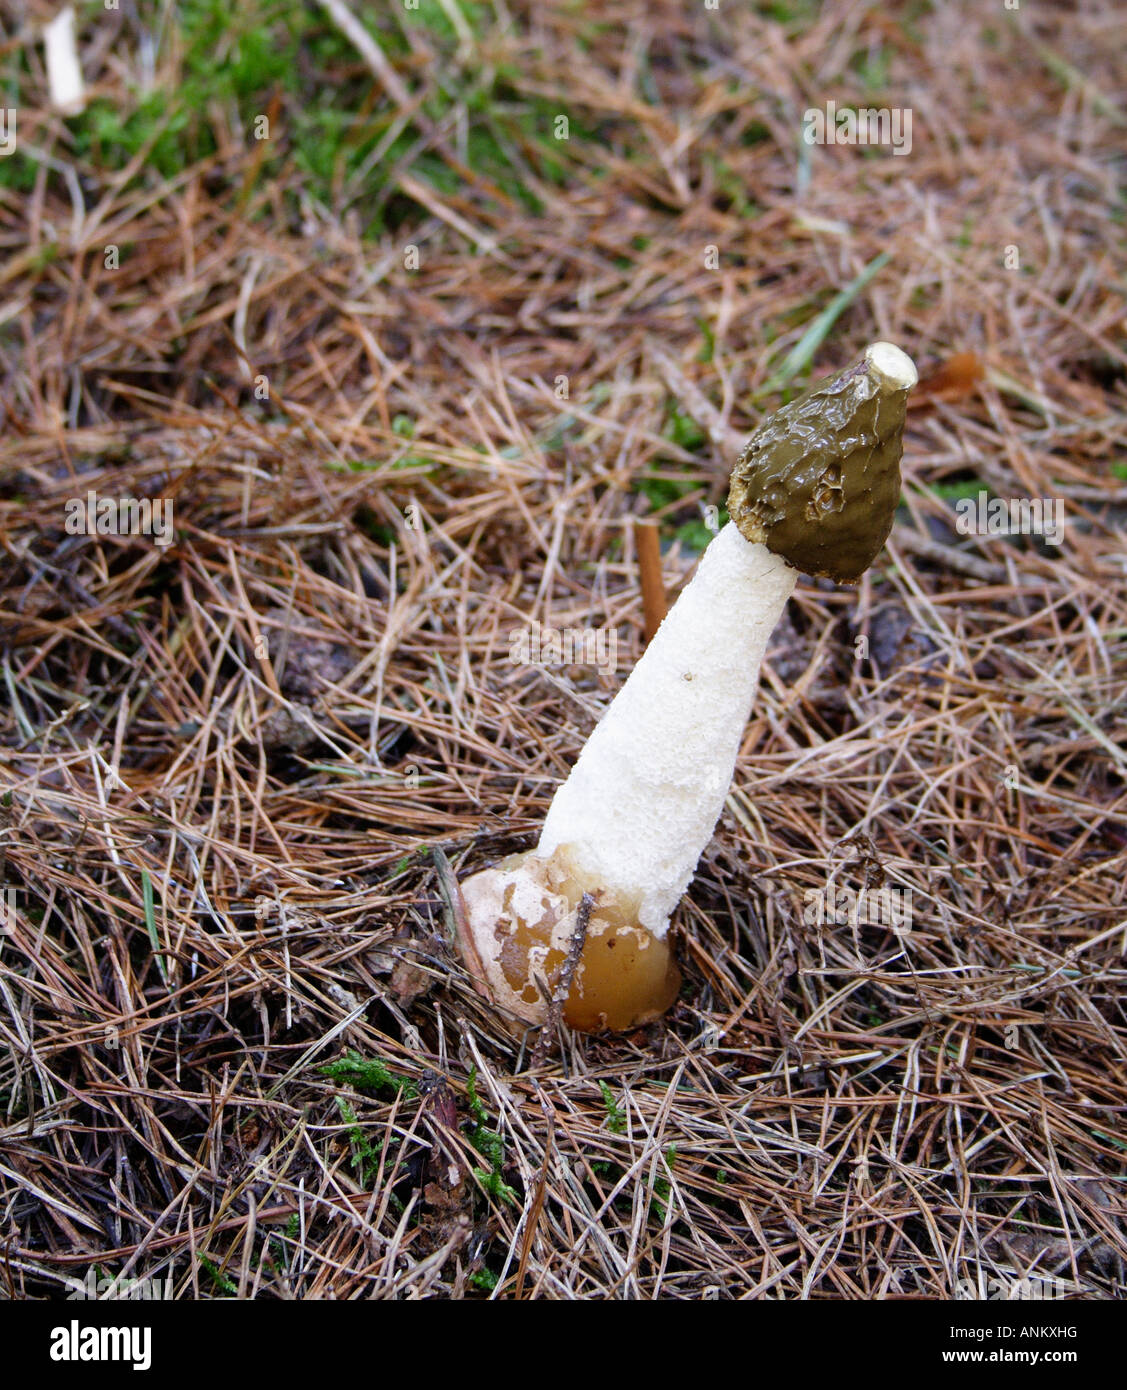 Mushroom, Fungus, Phallus impudicus Stock Photo